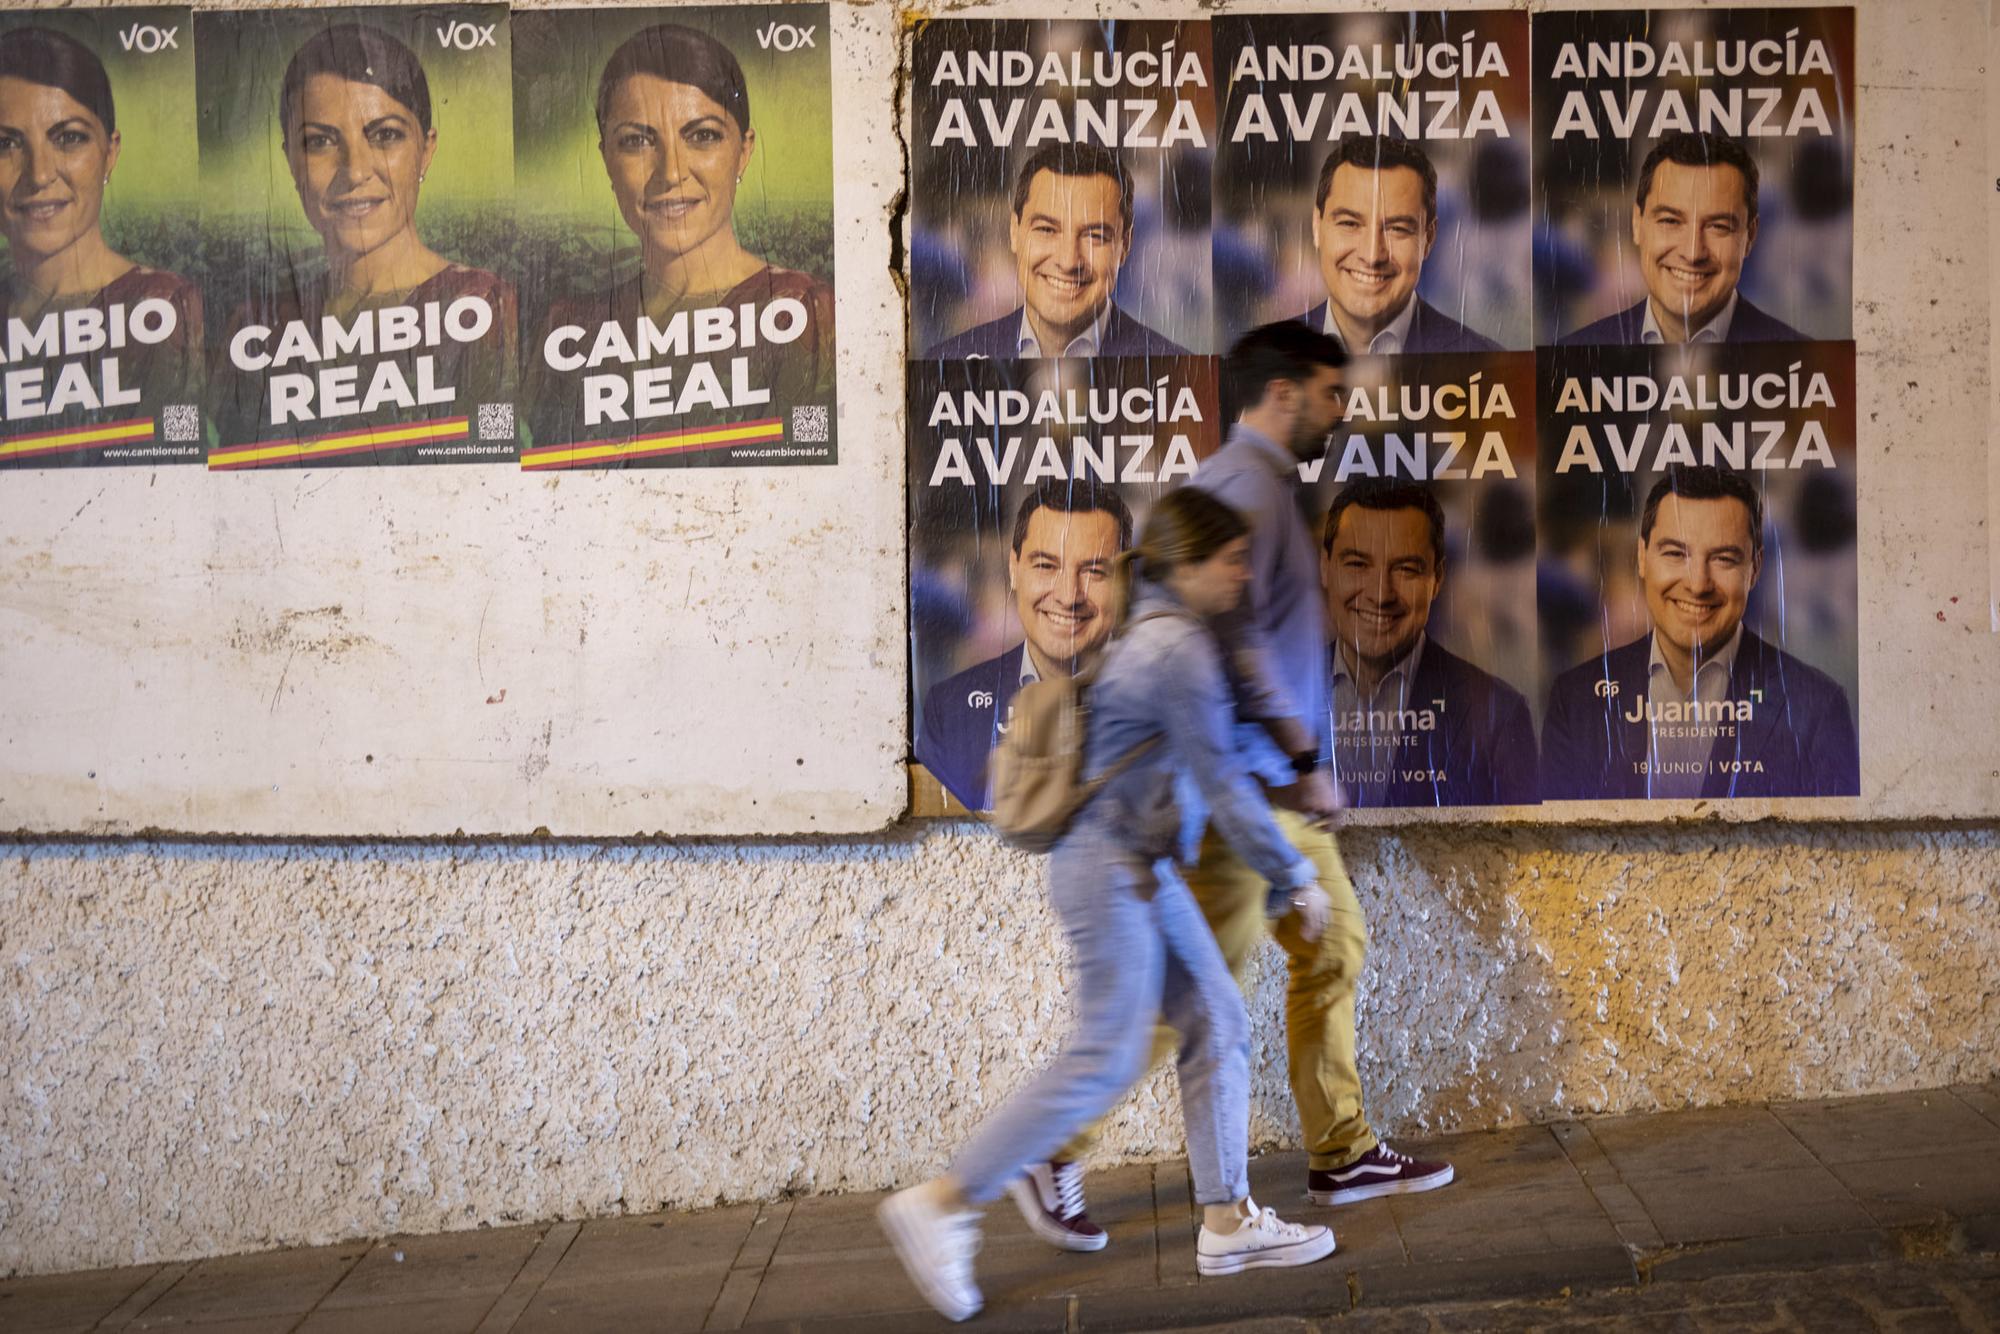 Andalucia carteles electorales 2